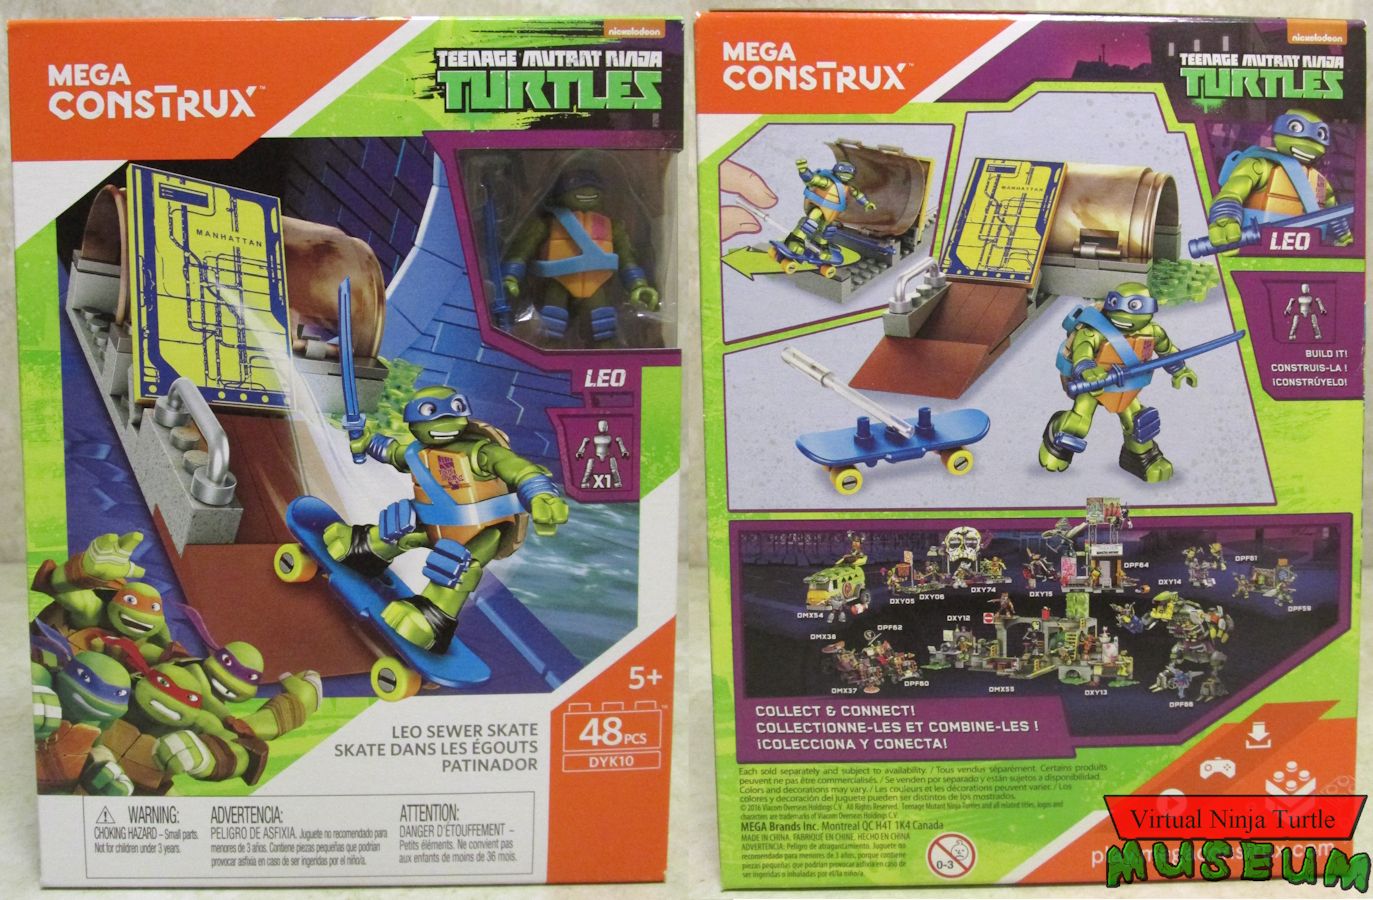 Mega Construx Teenage Mutant Ninja Turtles Leo Sewer Skate Set DYK10 48 PCS 